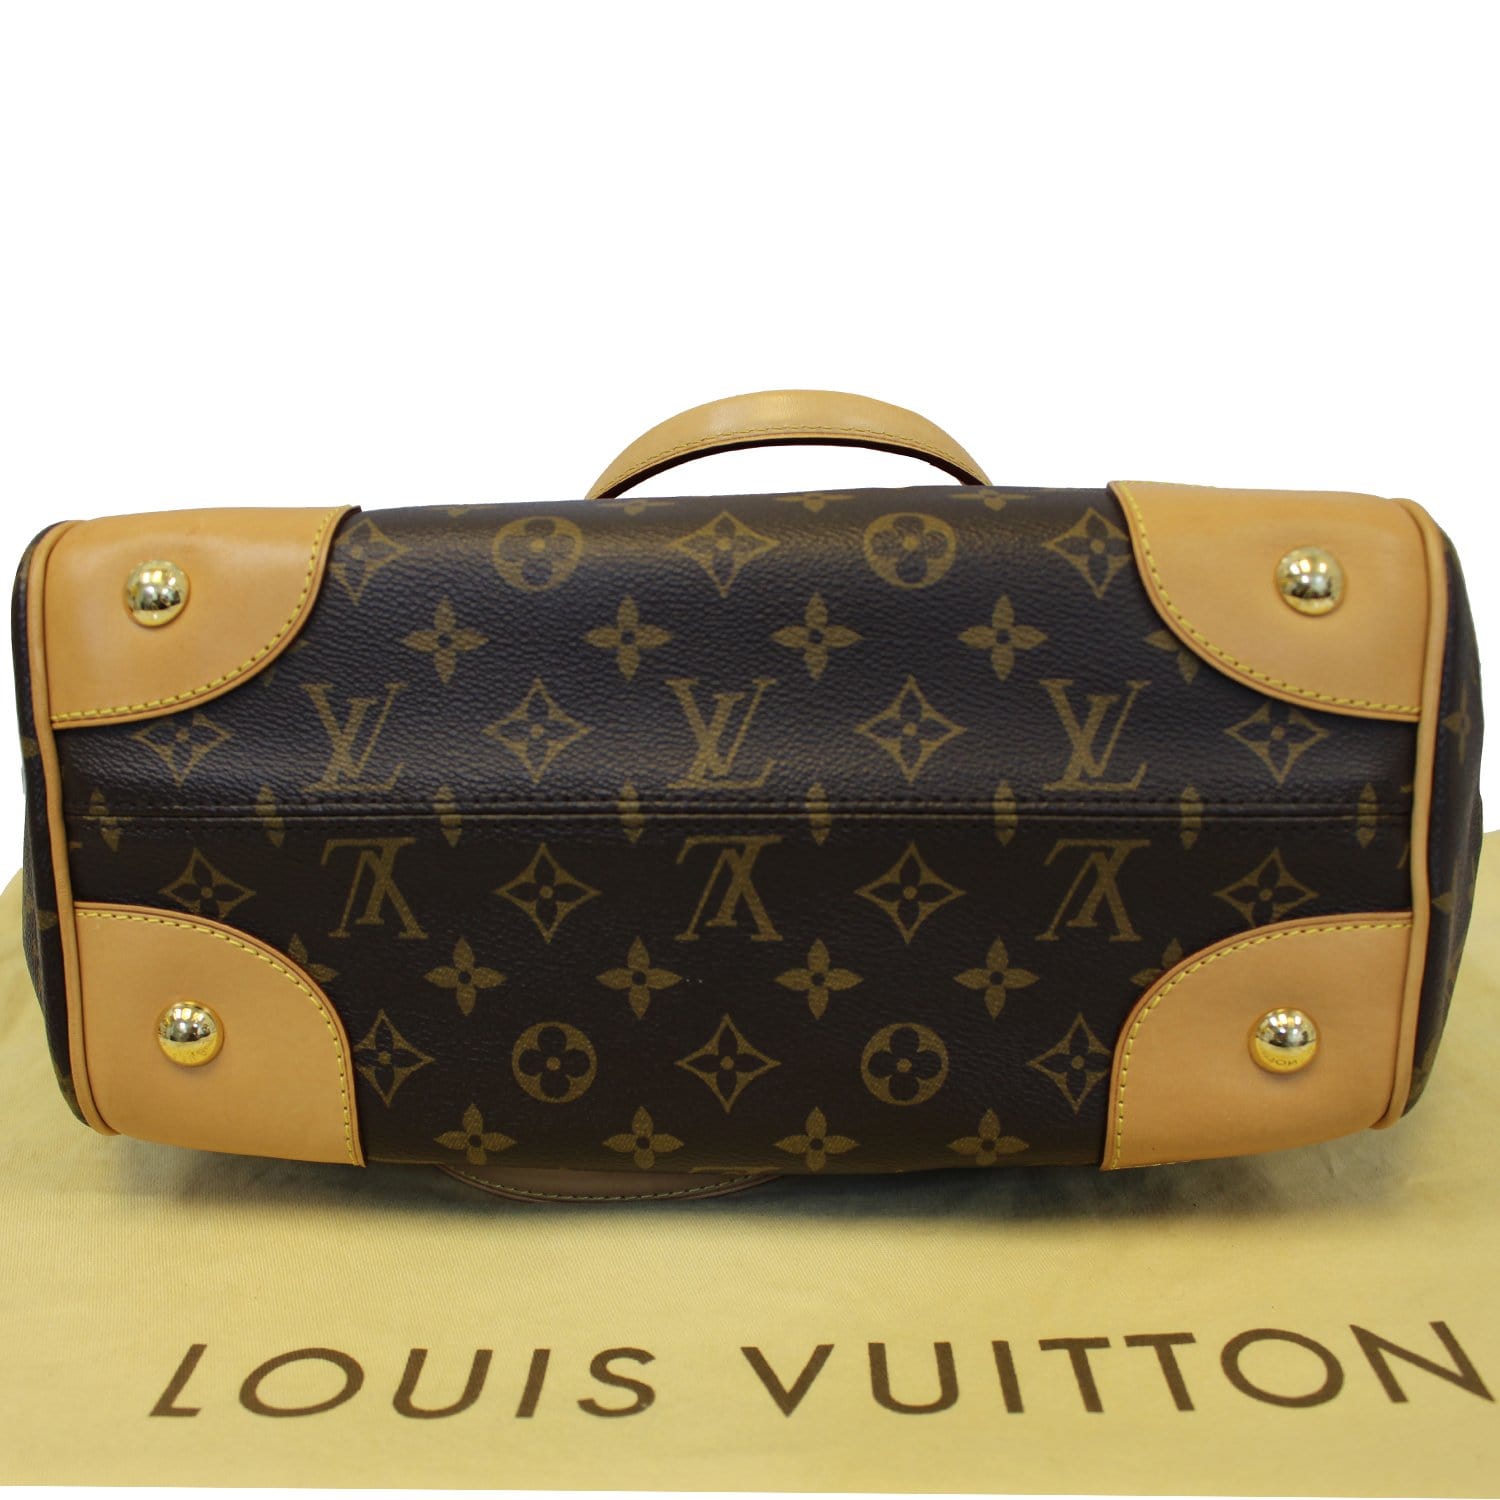 Comparison: Louis Vuitton Retiro NM vs. Speedy B 30 